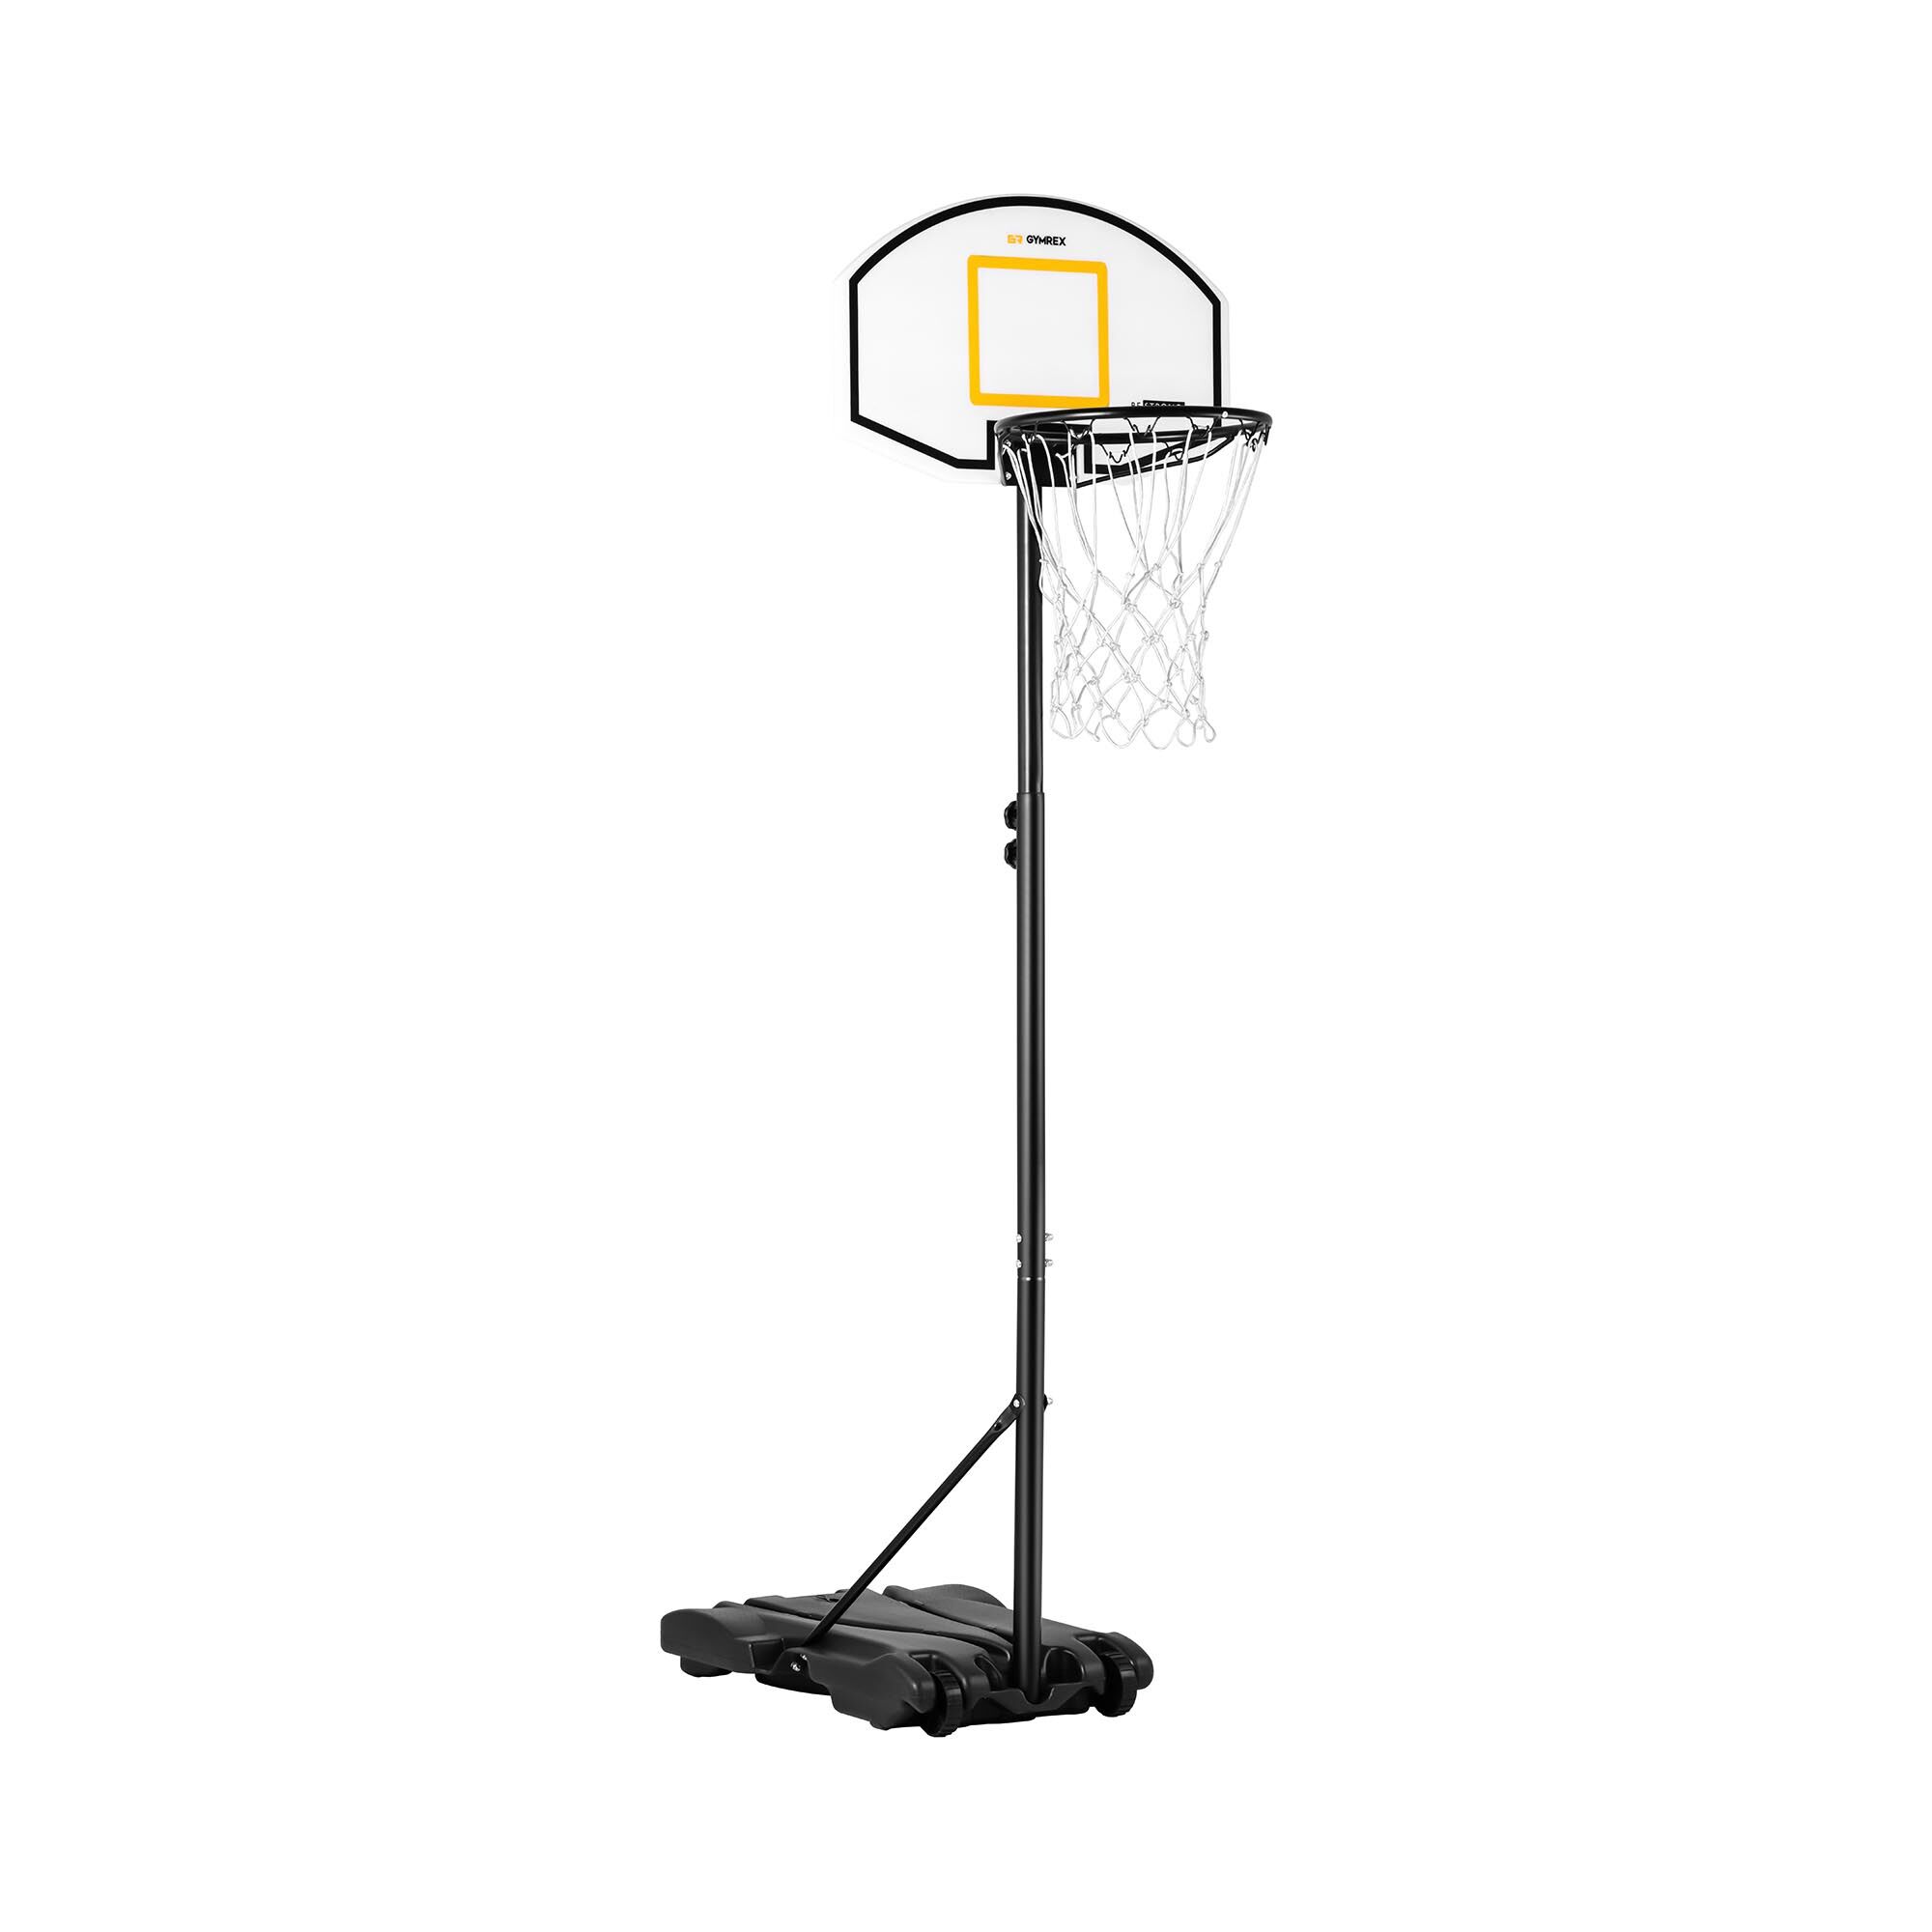 Gymrex Tabela de basquetebol - suporte - 178-205 cm GR-MG44